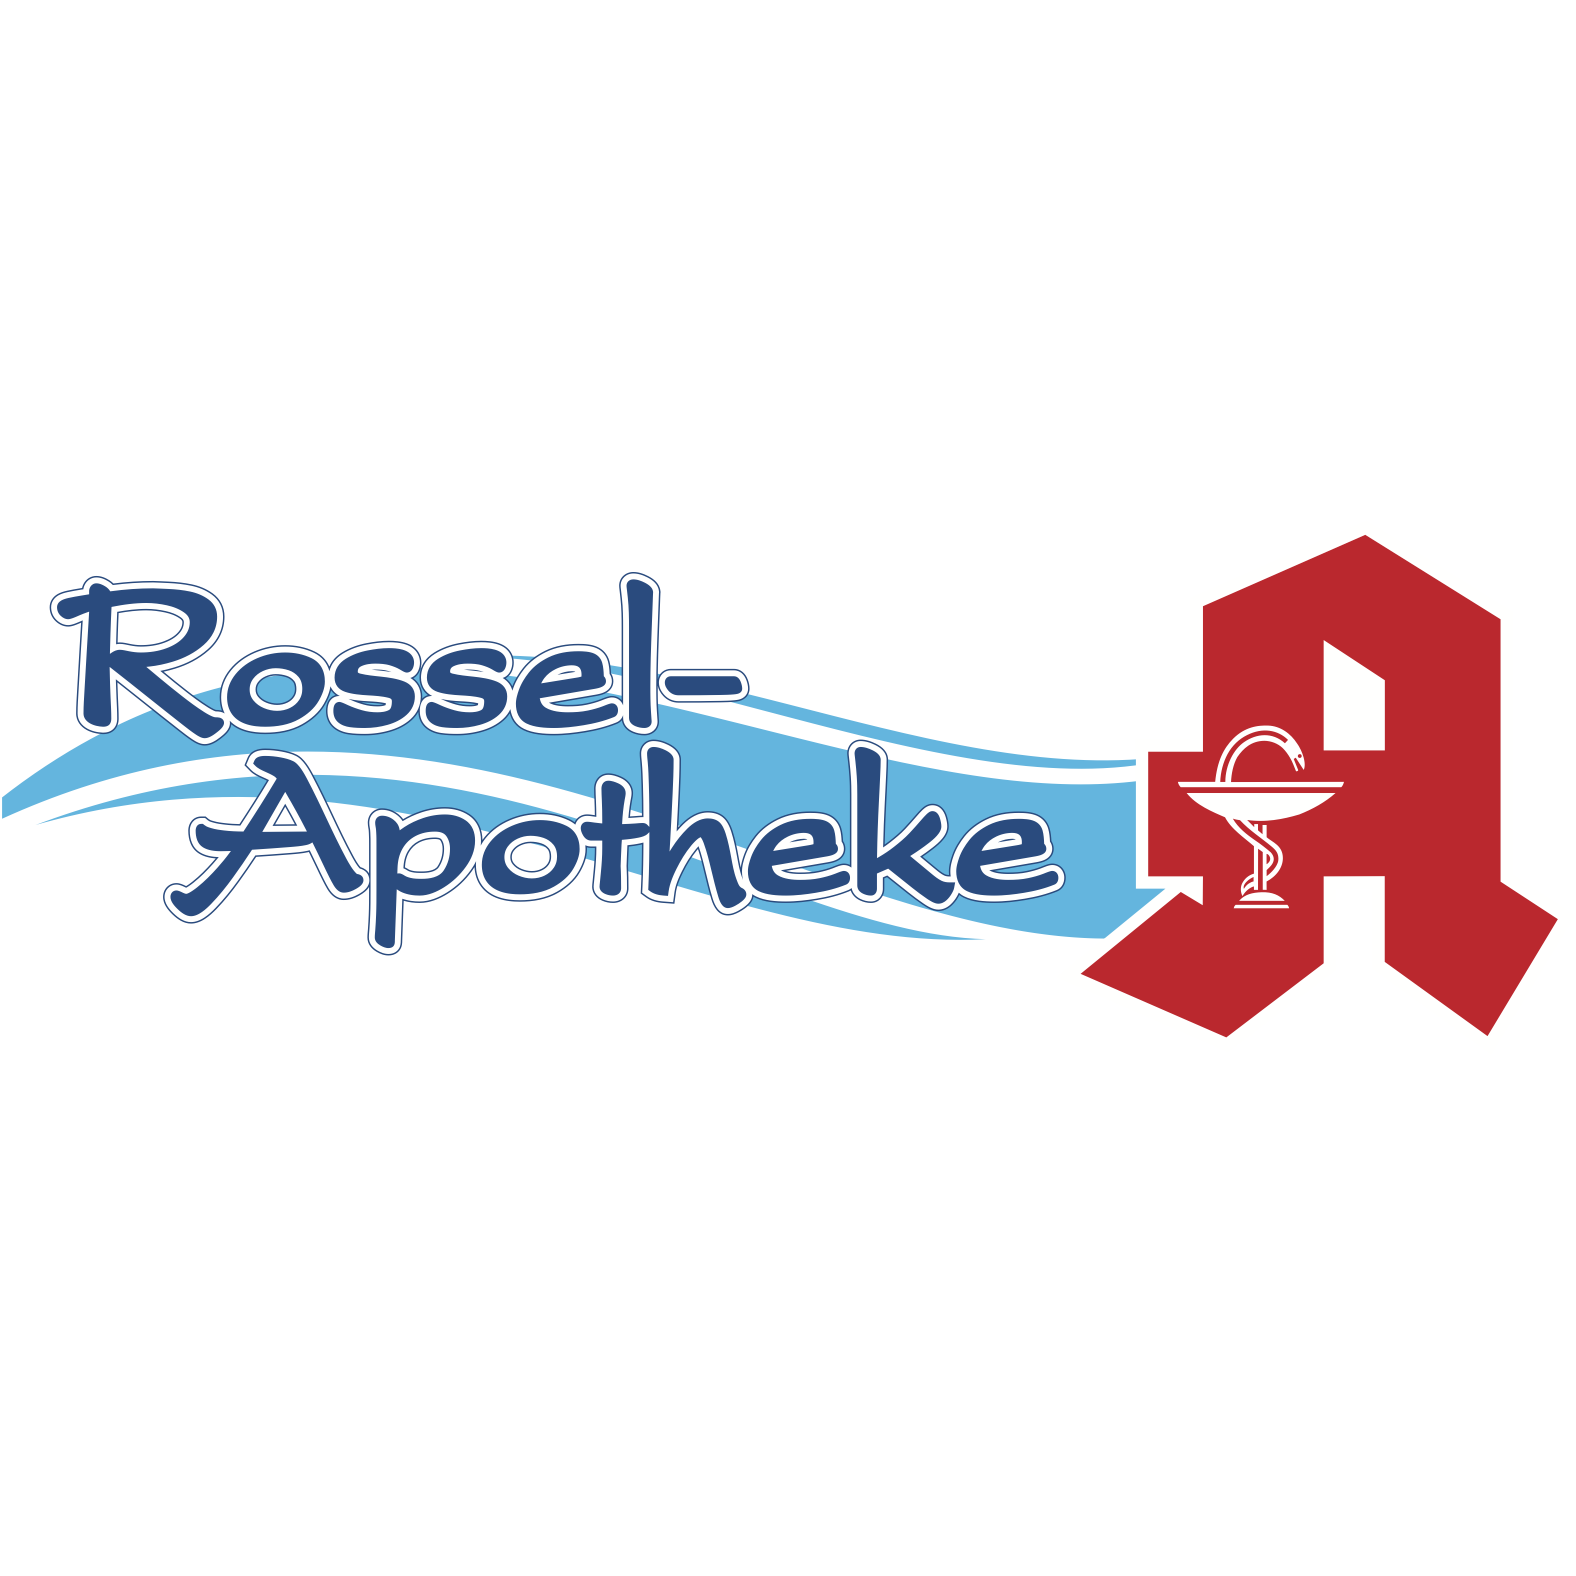 Rossel-Apotheke in Dessau-Roßlau - Logo